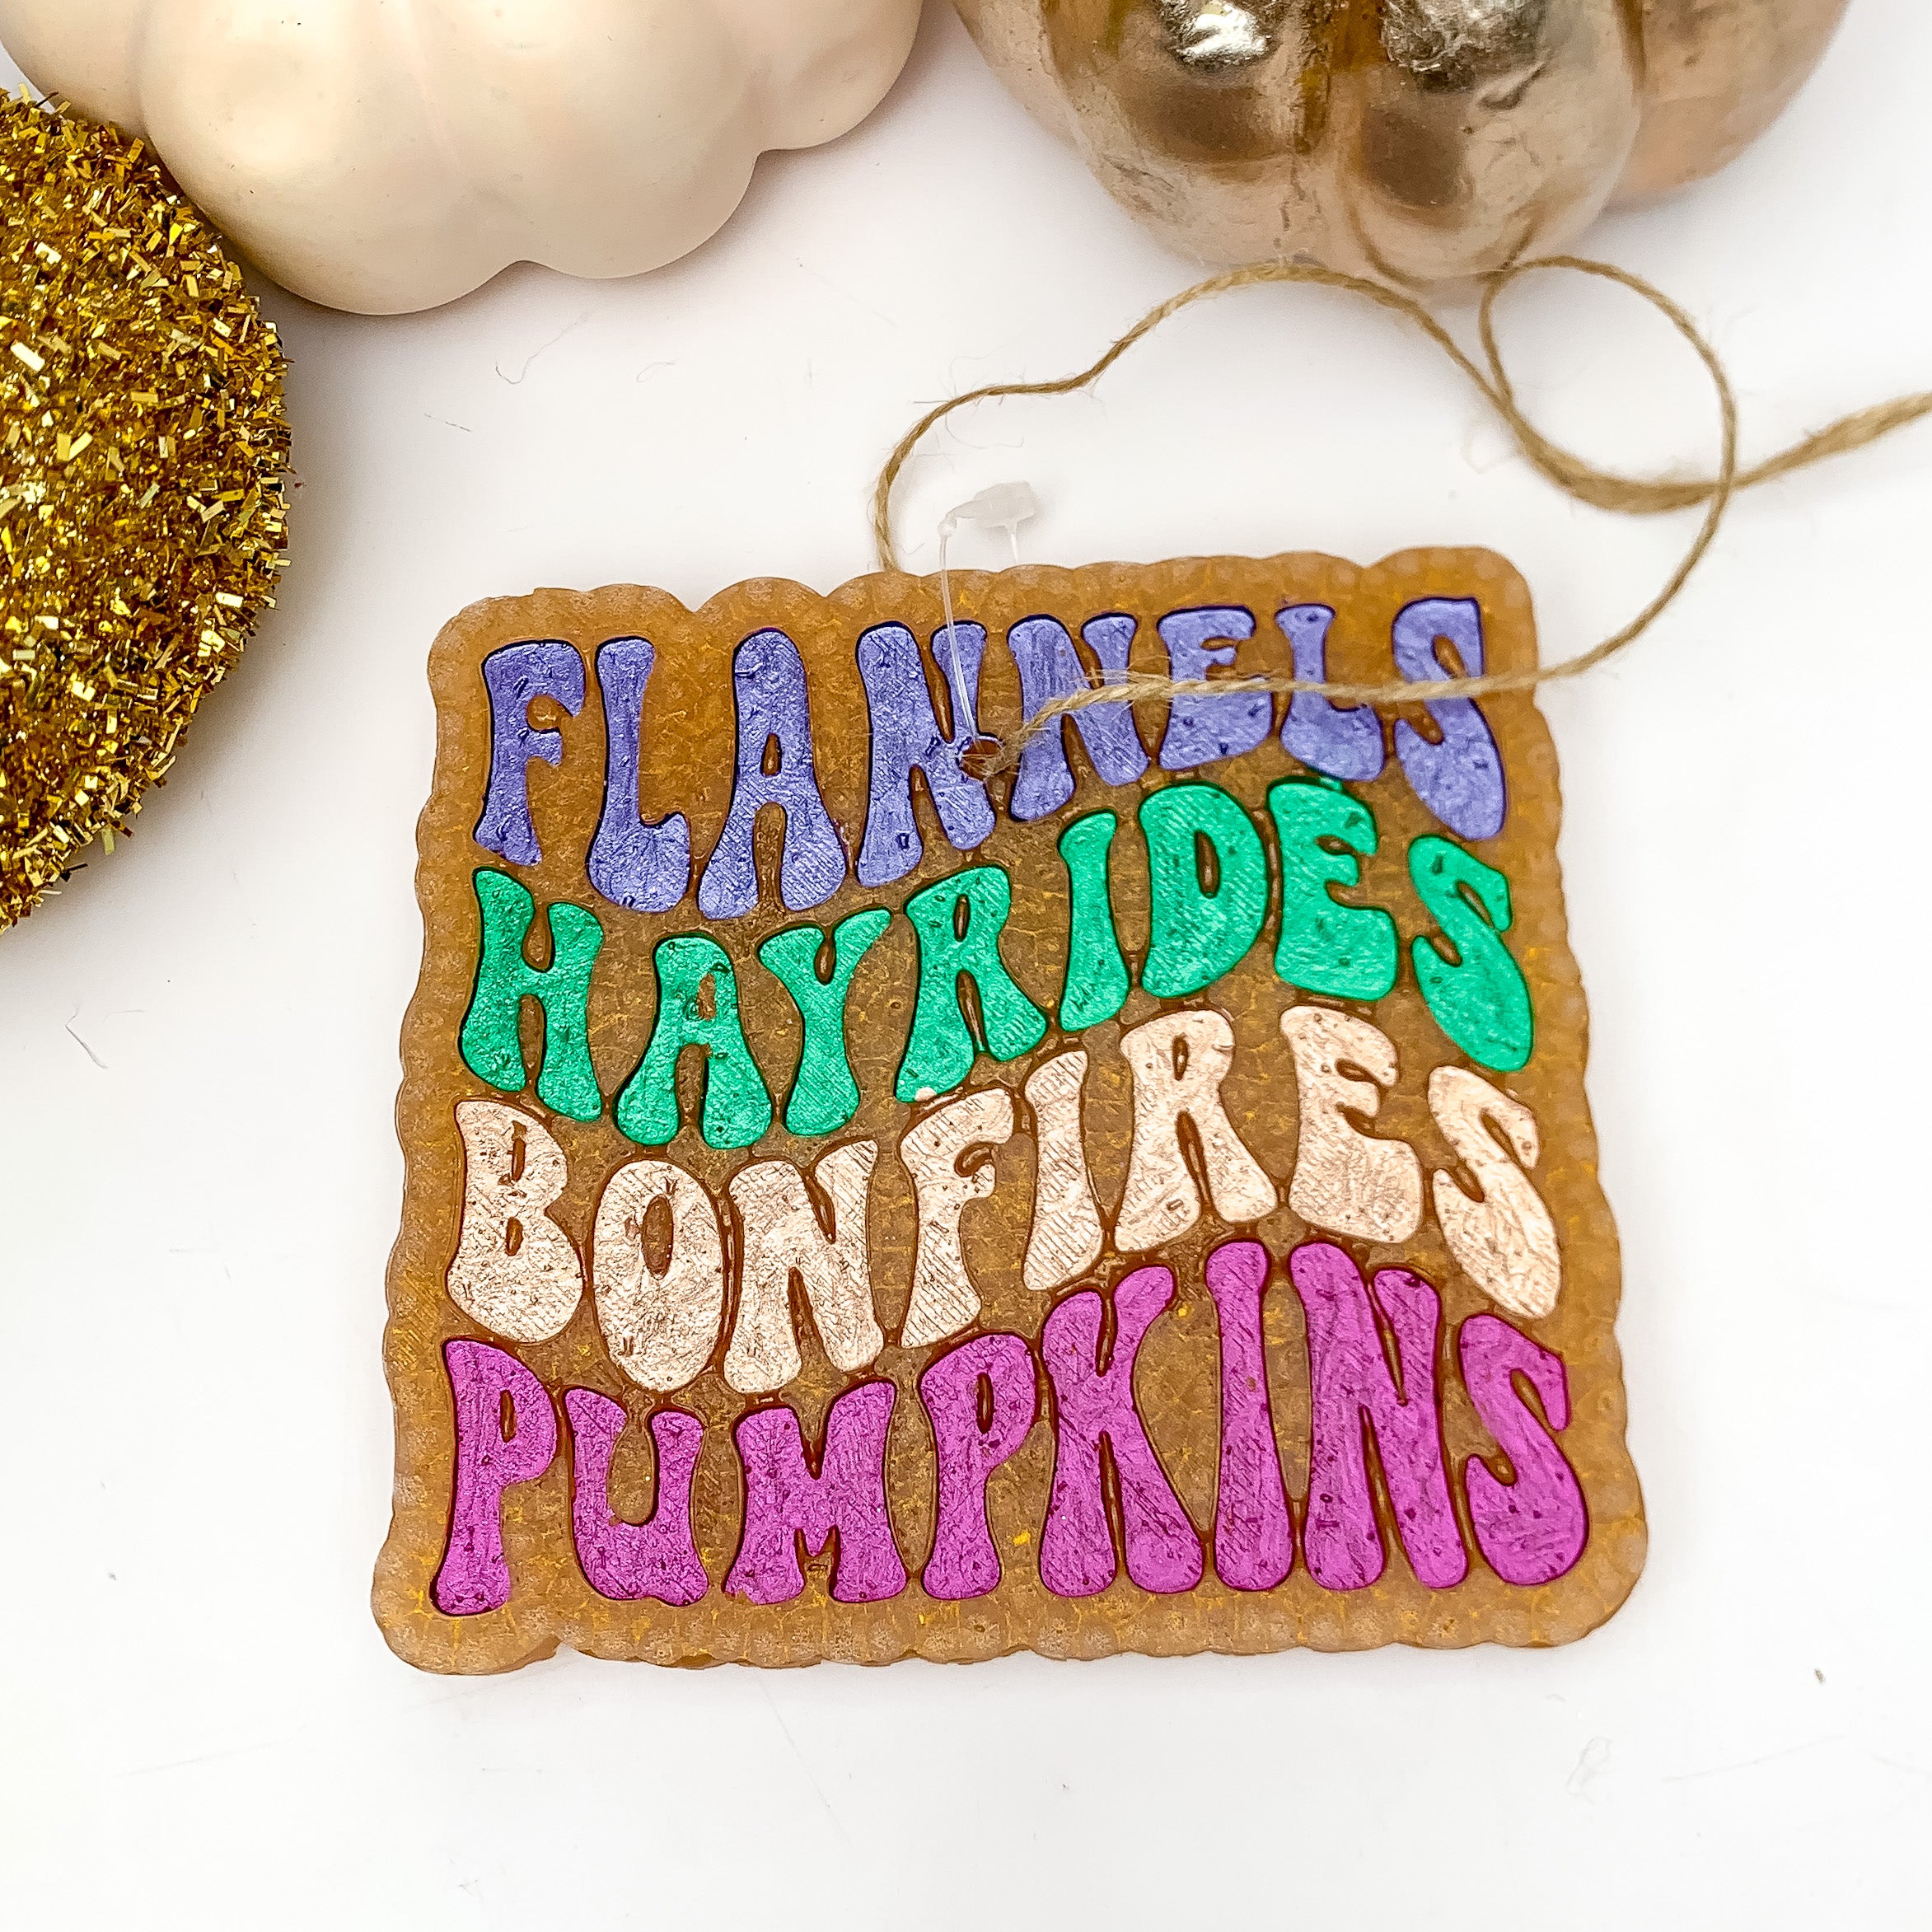 "Flannels Hayrides Bonfires Pumpkins" Freshie in Butter Pecan Waffles - Giddy Up Glamour Boutique